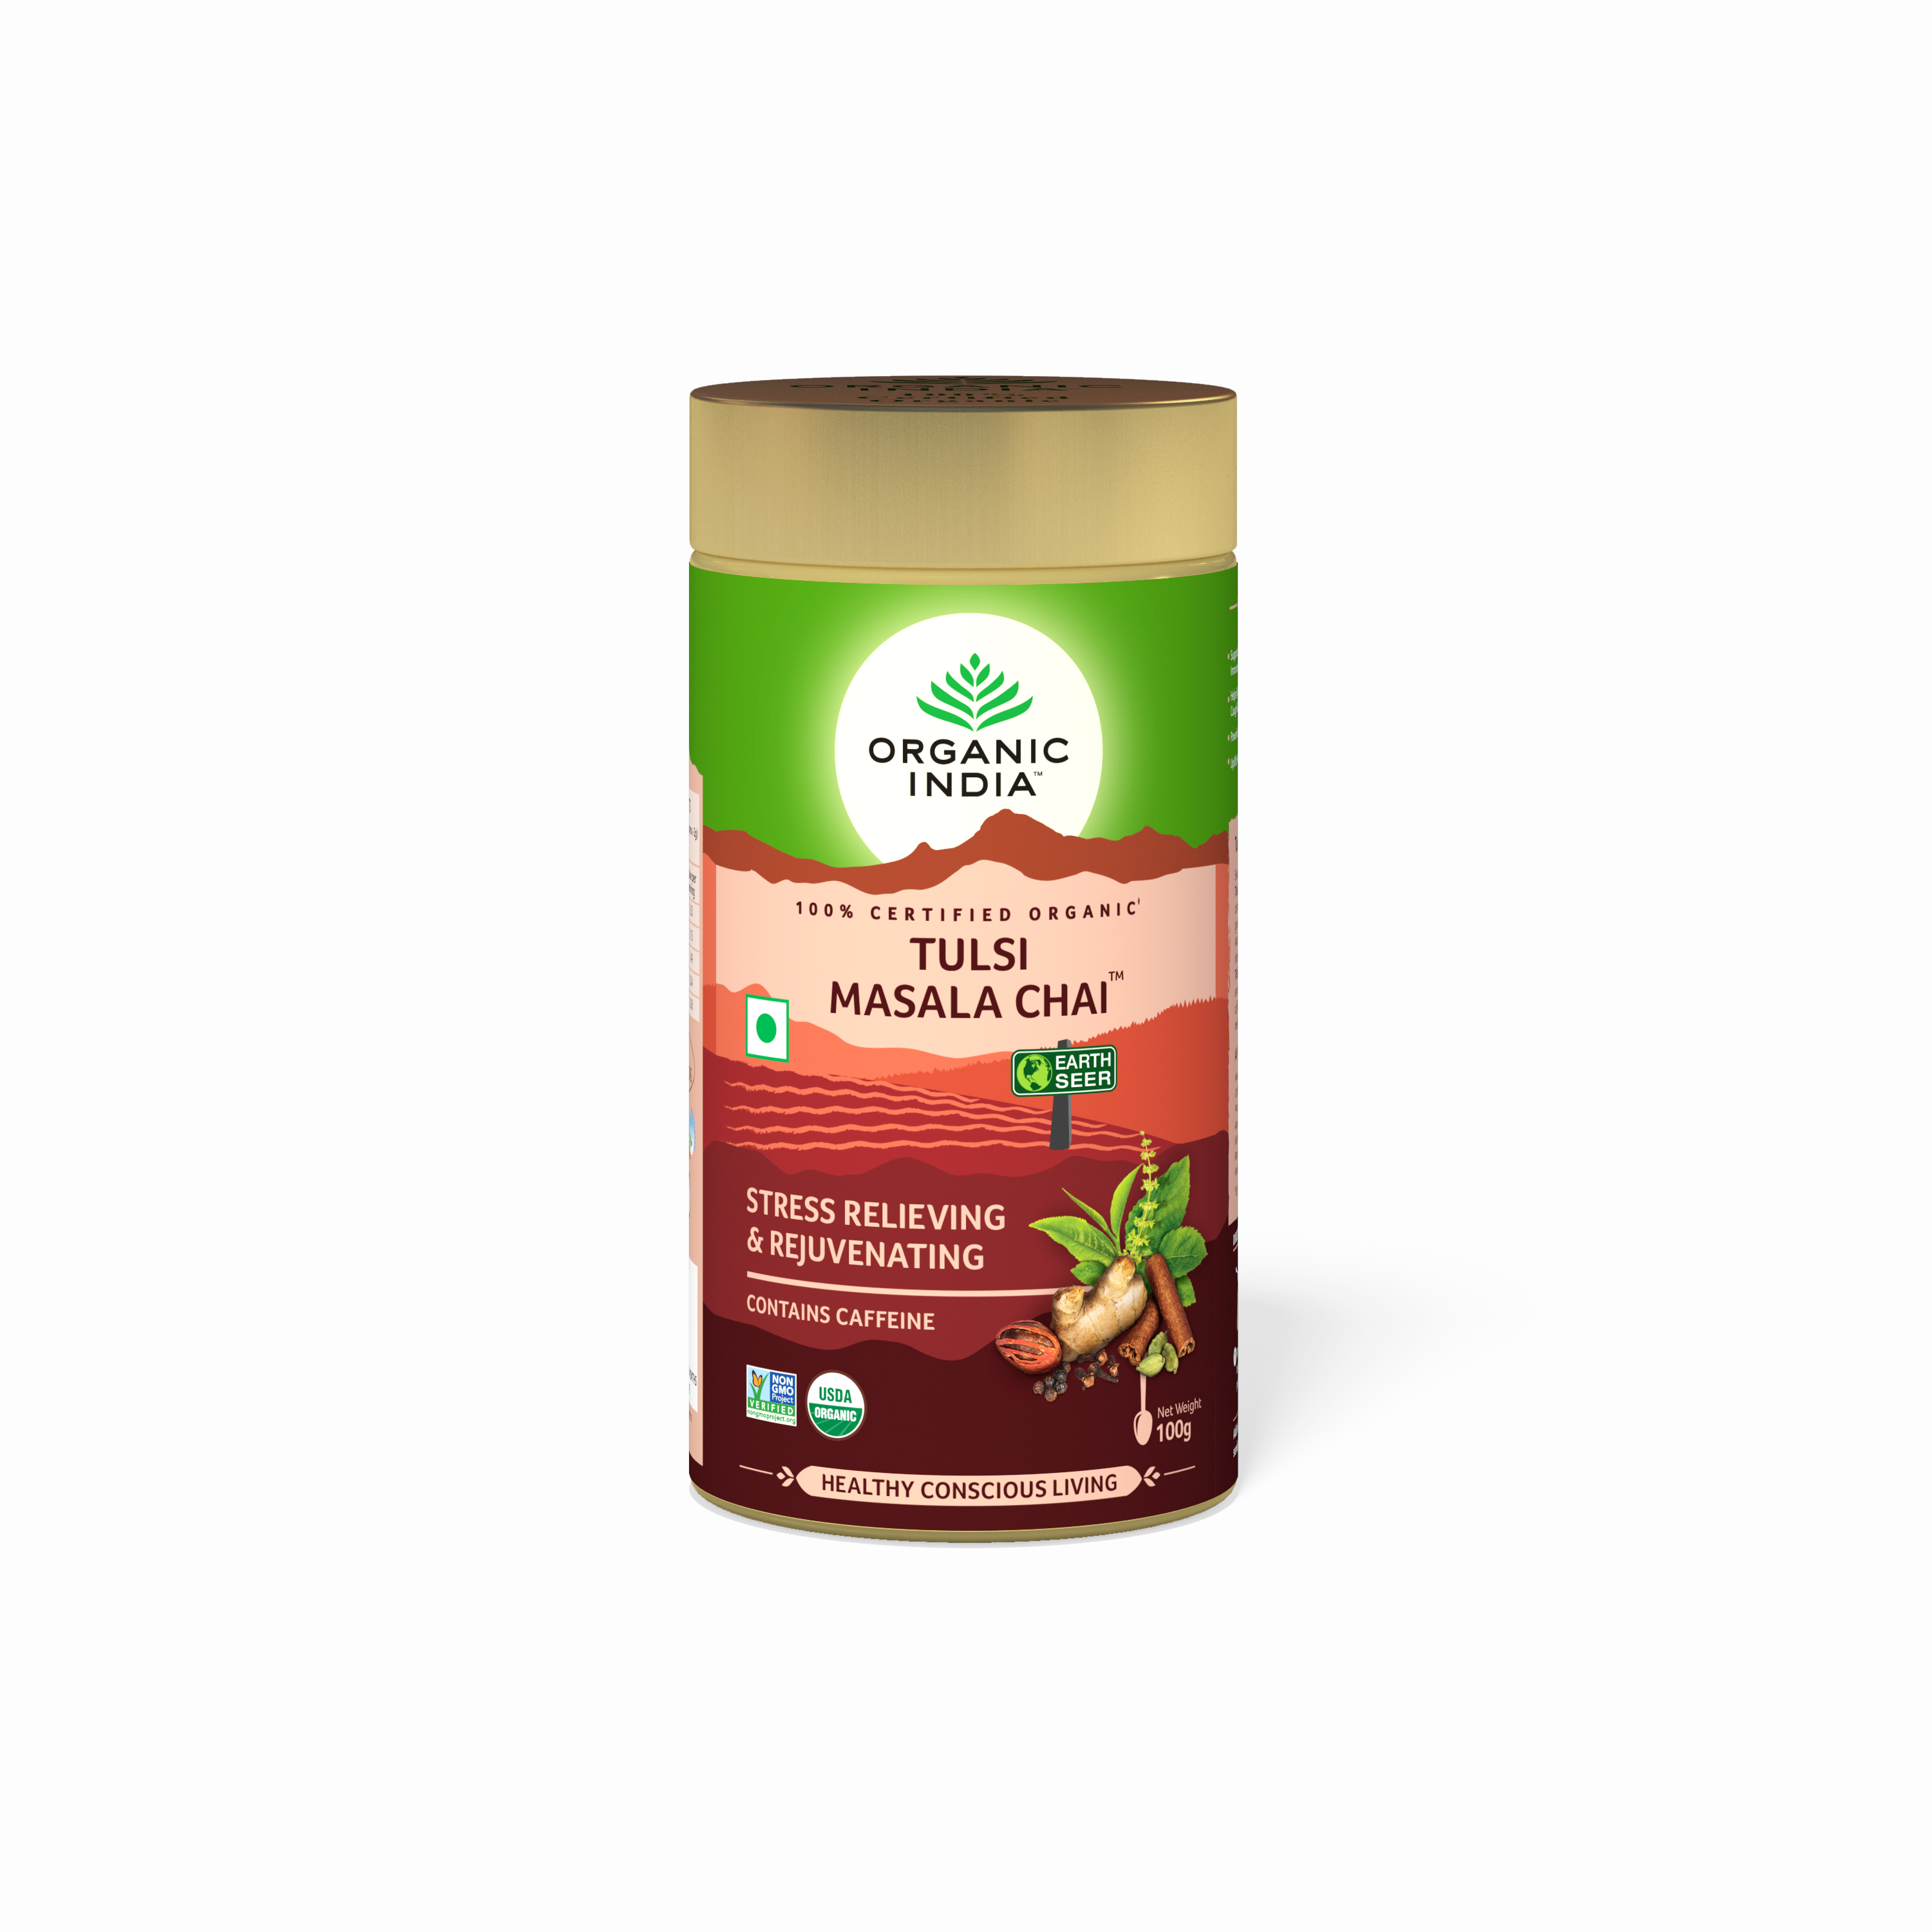 Buy Organic India Tulsi Masala Chai Tin at Best Price Online